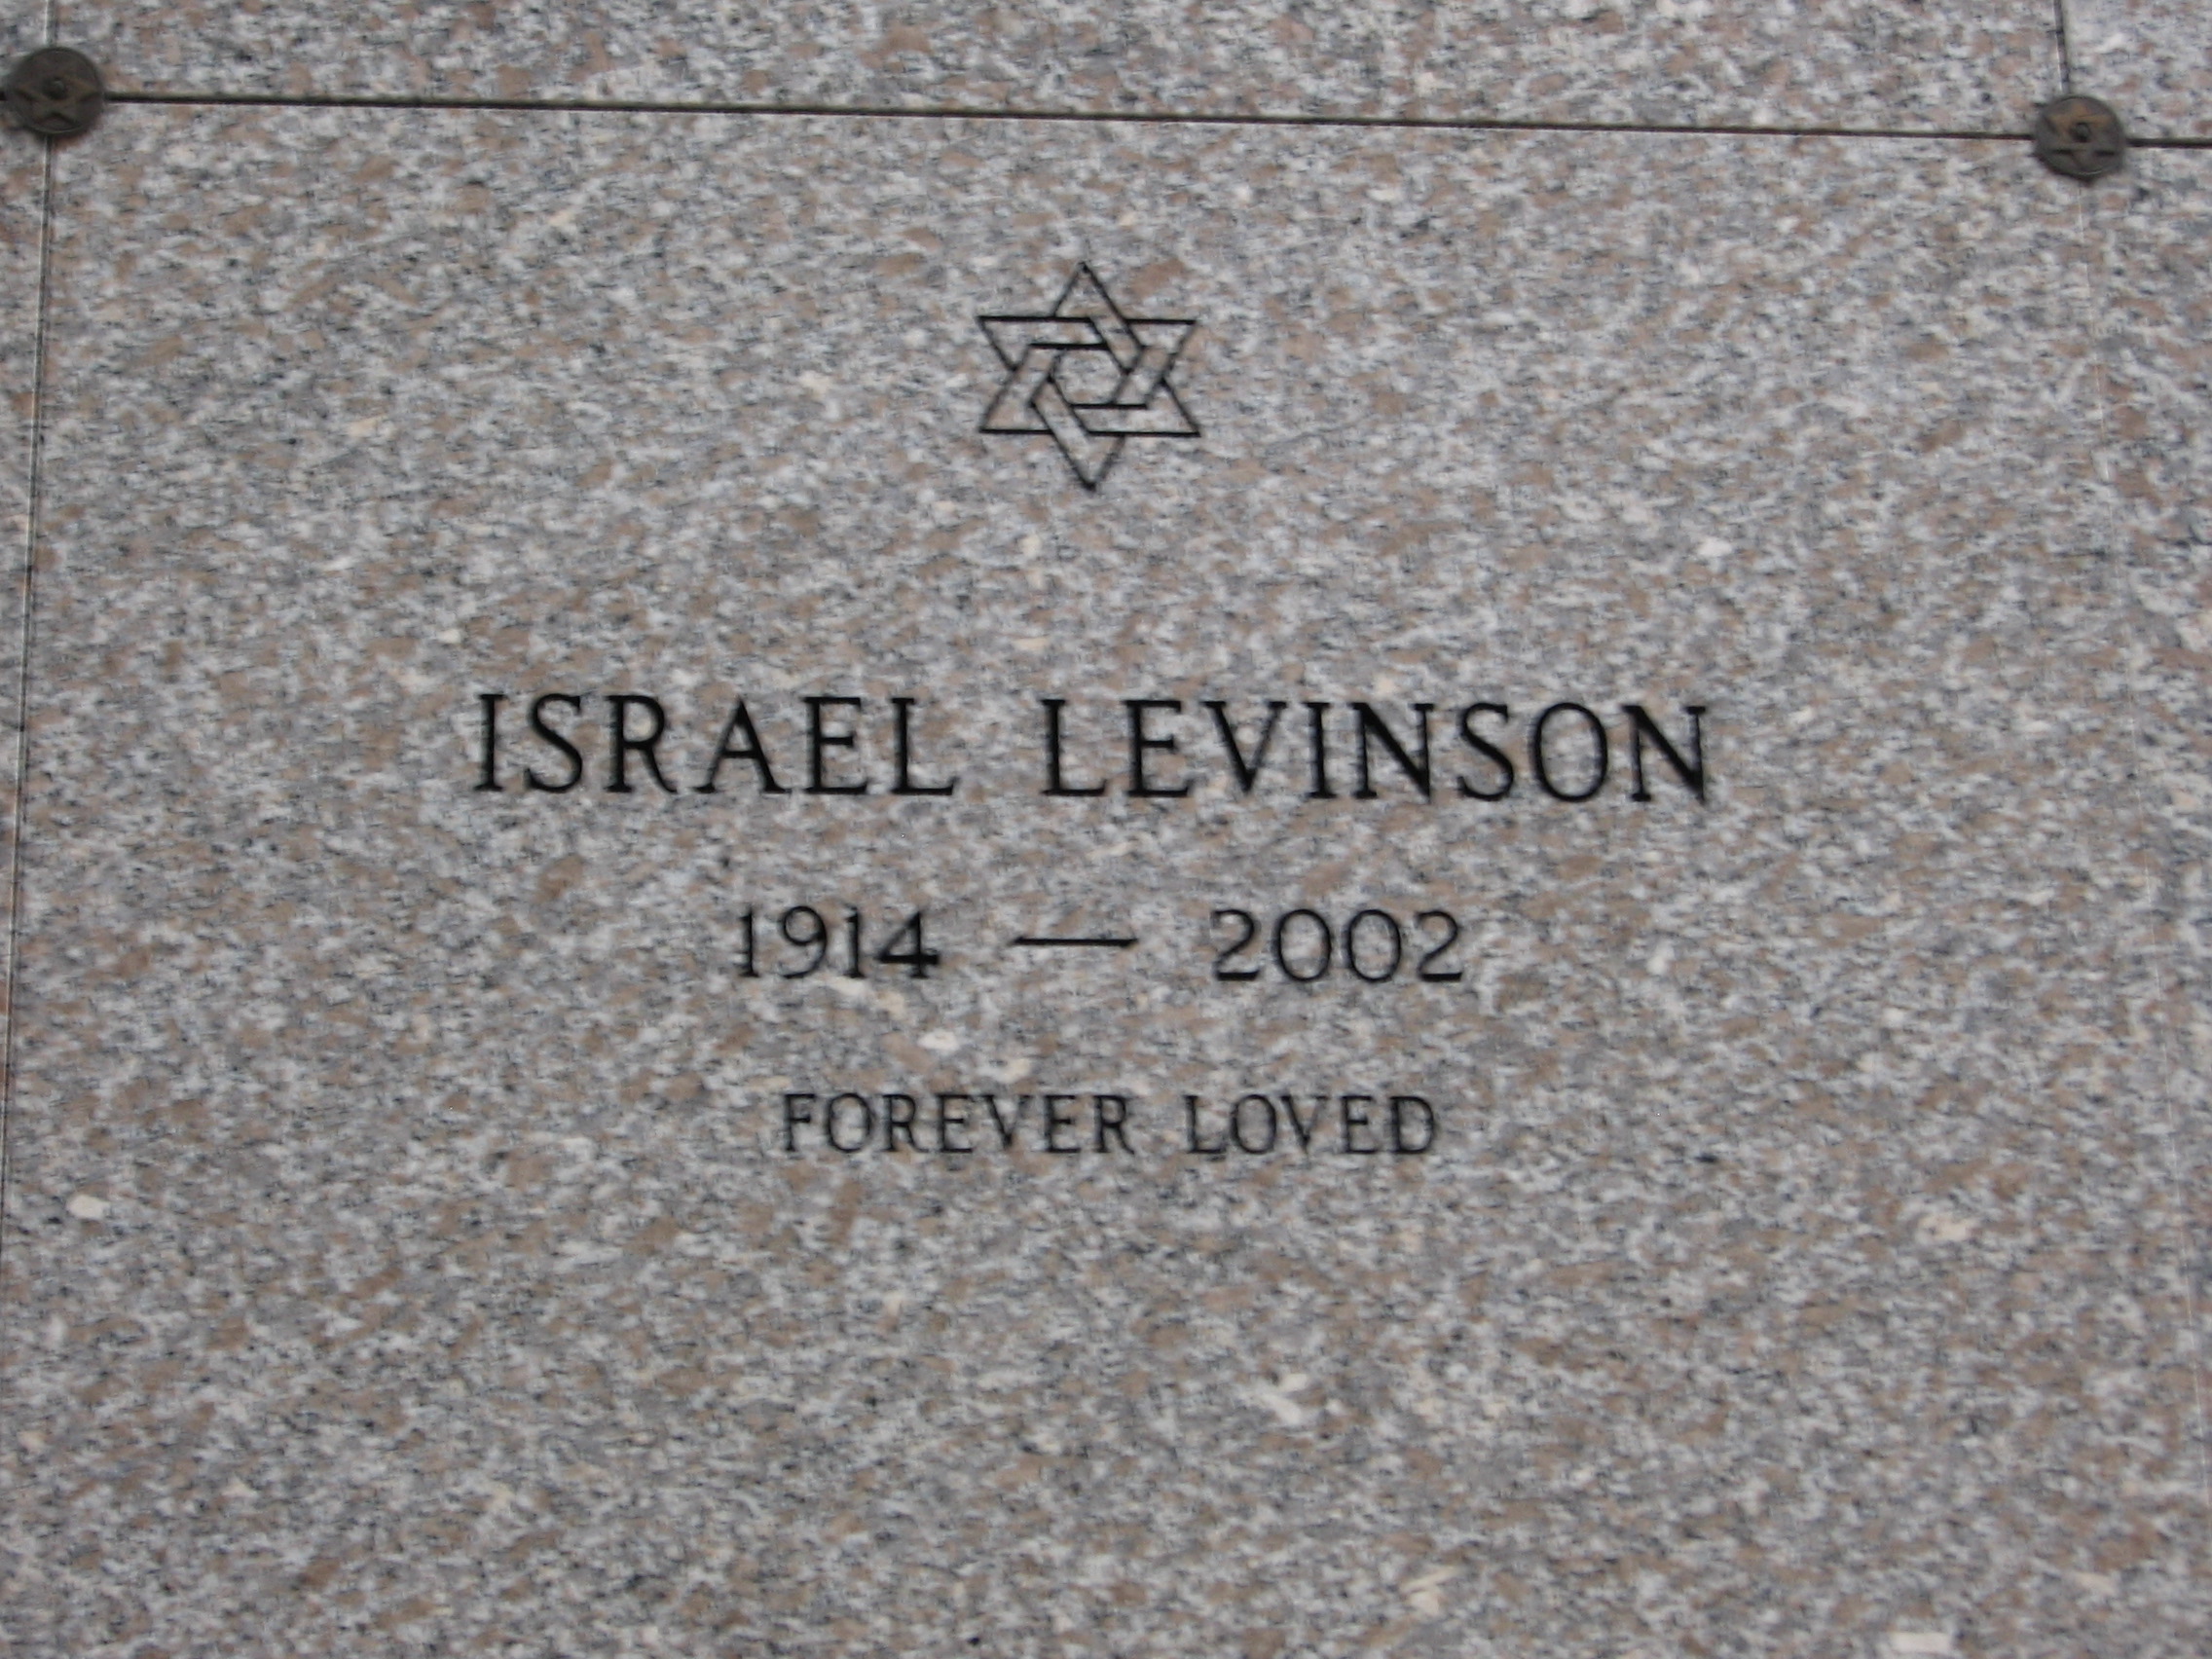 Israel Levinson